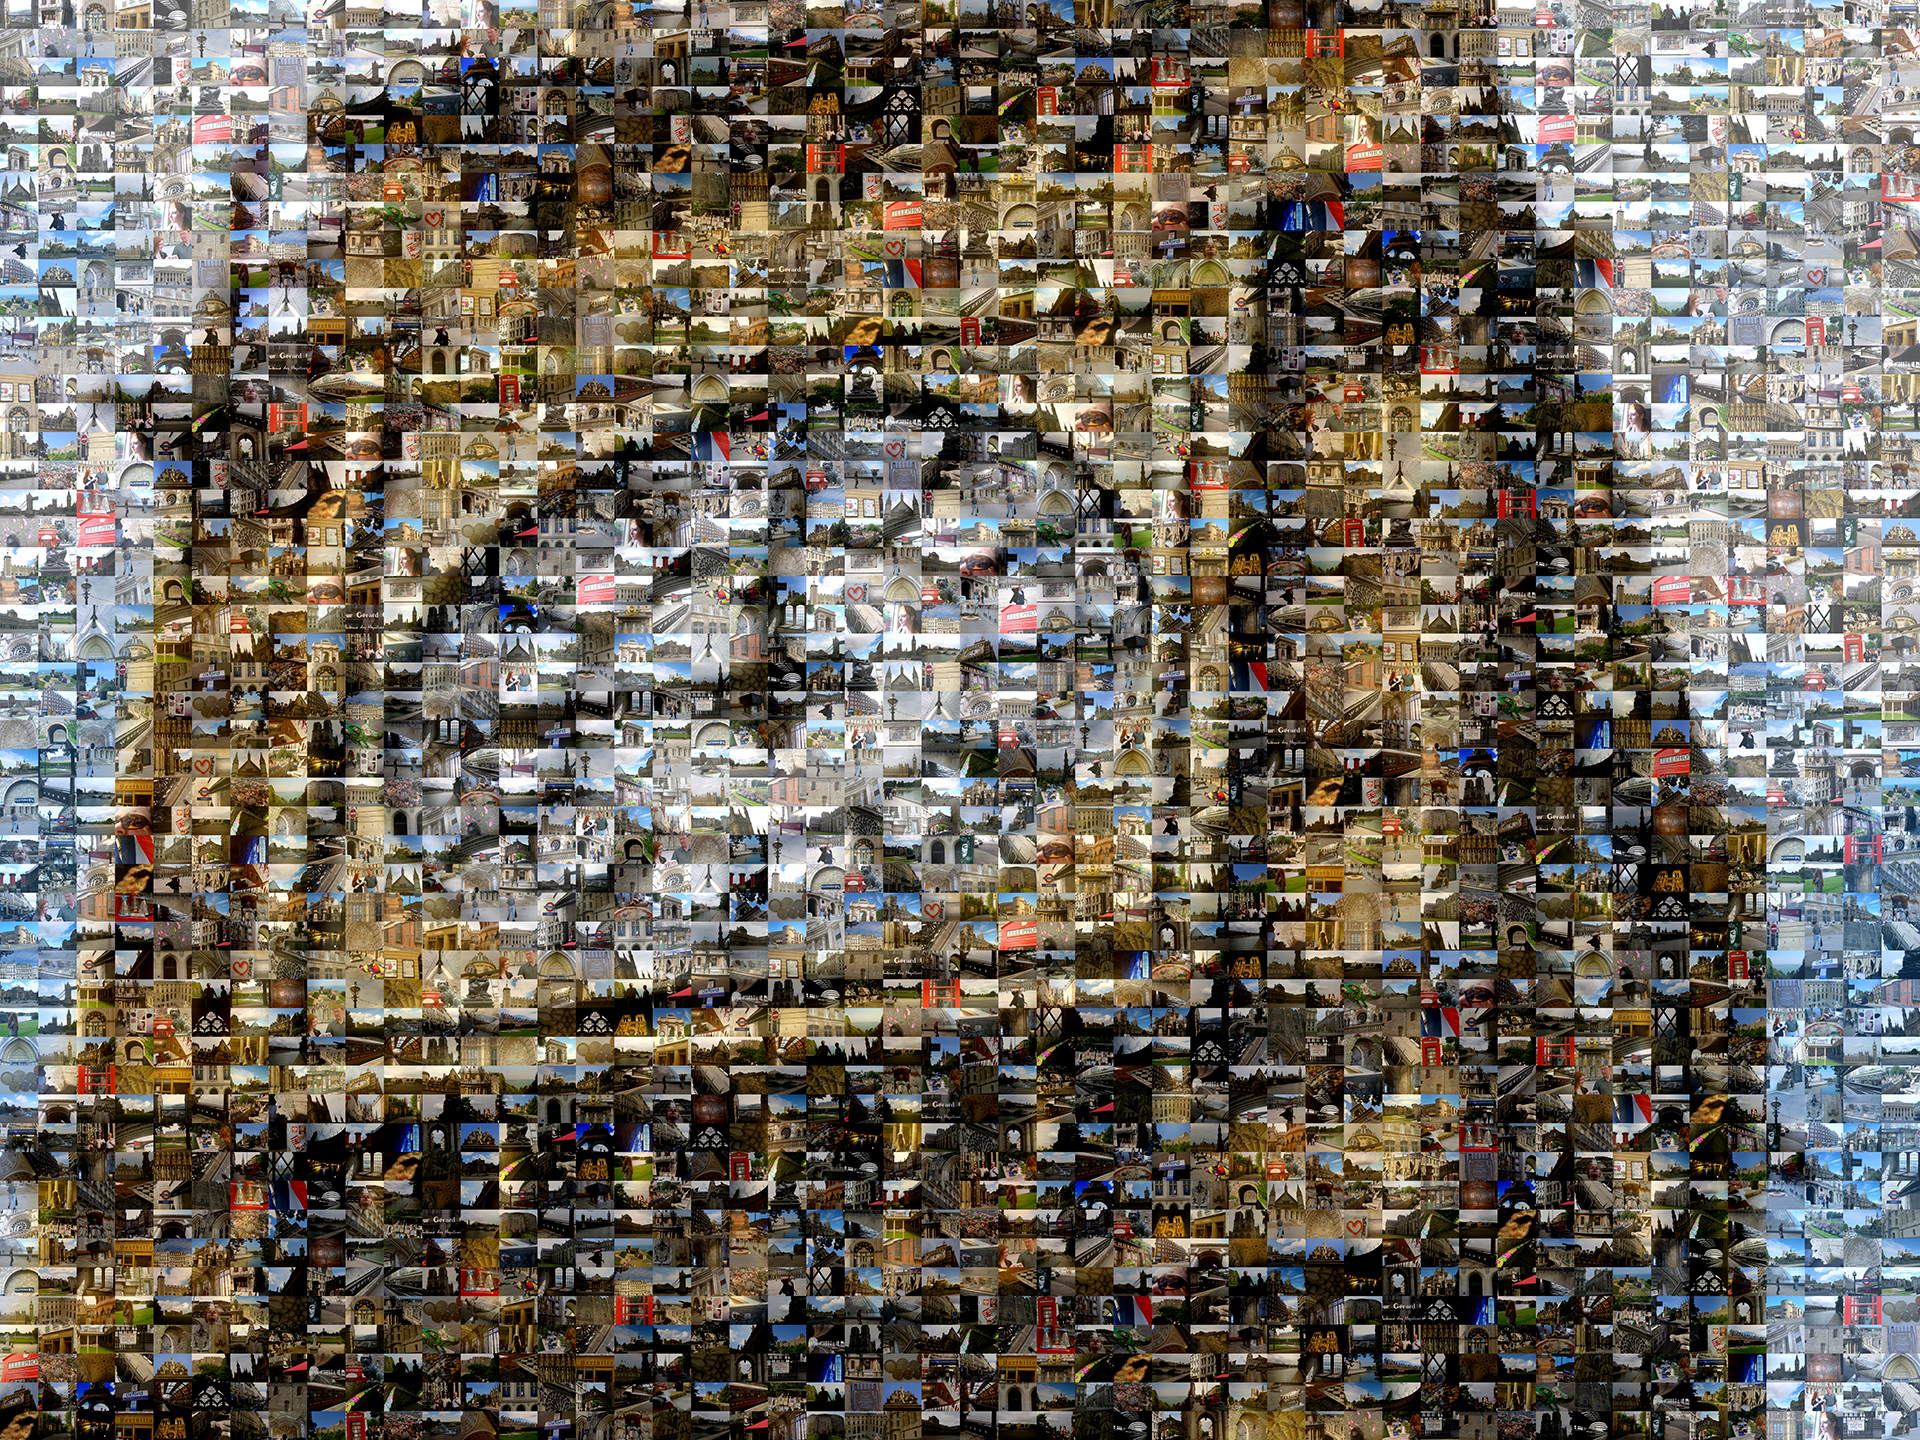 photo mosaic created using 229 travel photos